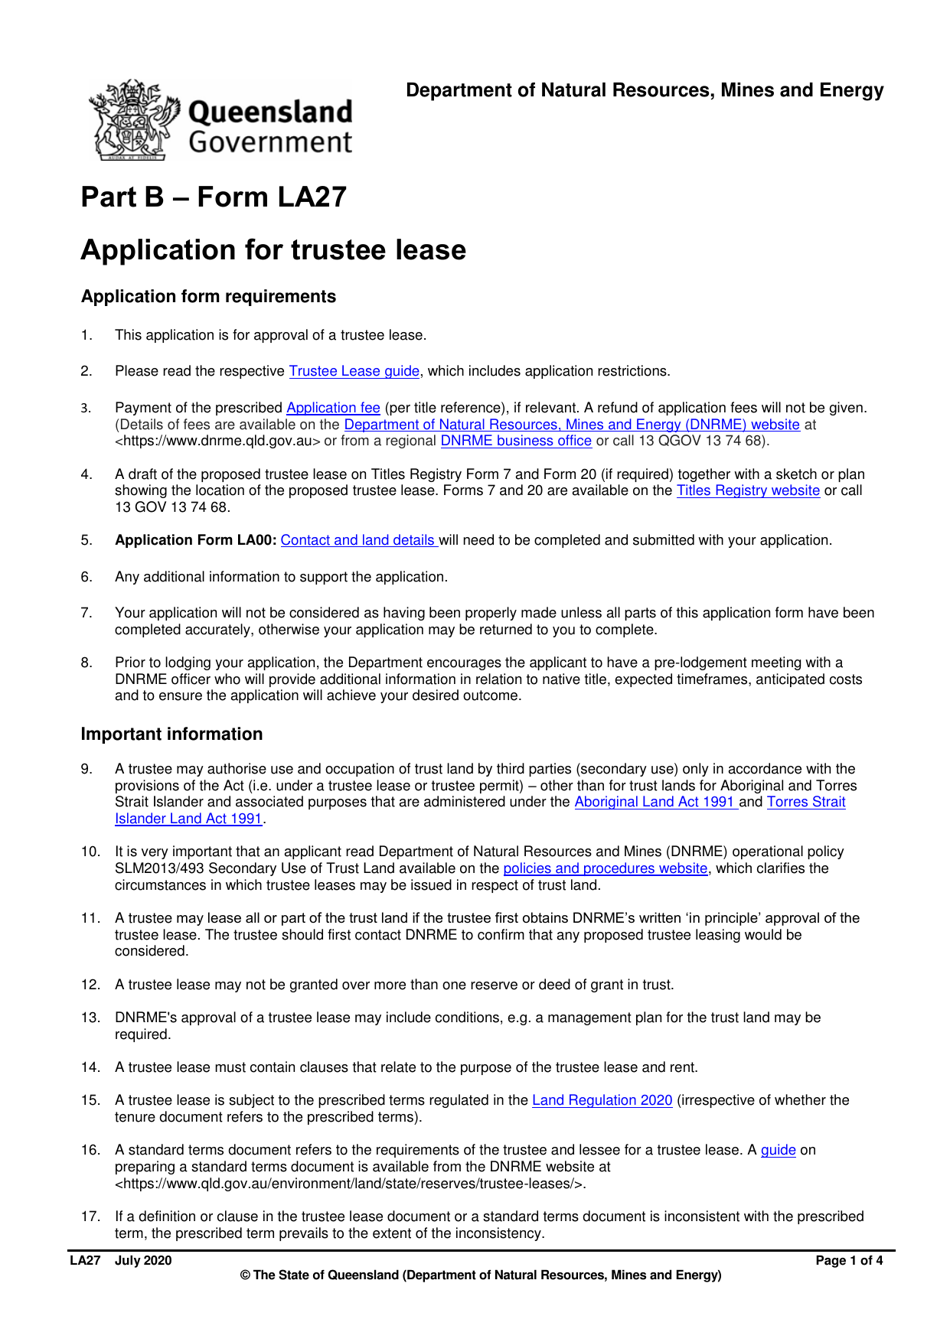 Form LA27 Part B Application for Trustee Lease - Queensland, Australia, Page 1